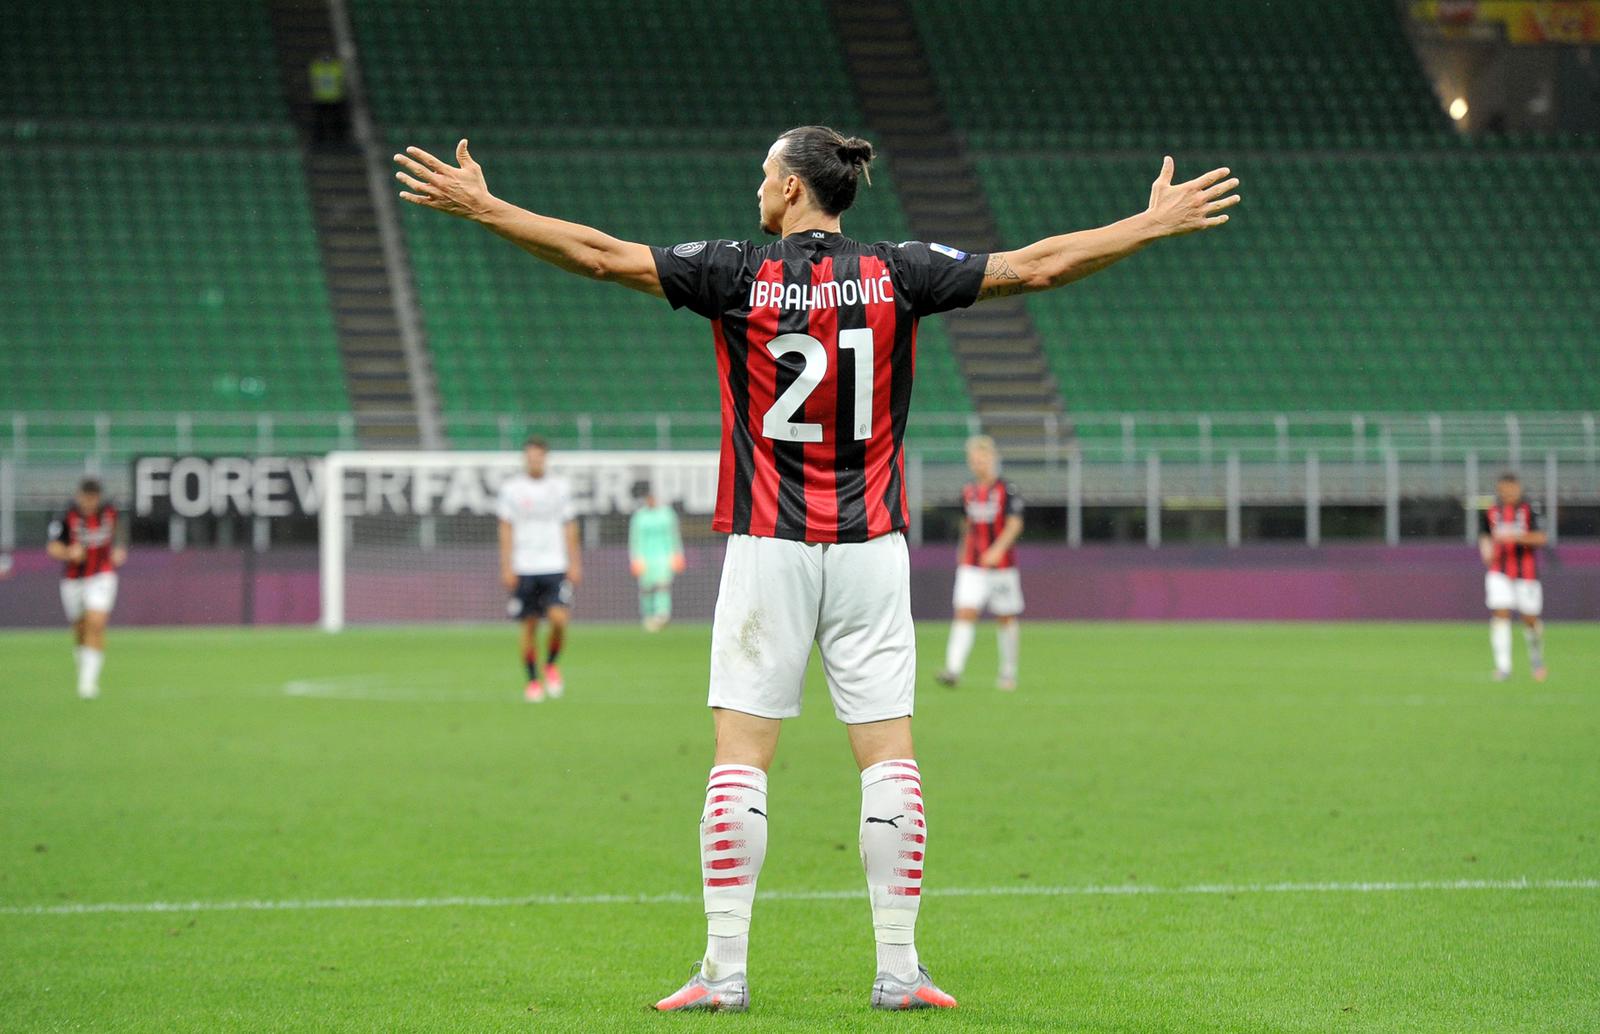 Milan: Zlatan Ibrahimovic - Milanpress, robe dell'altro diavolo